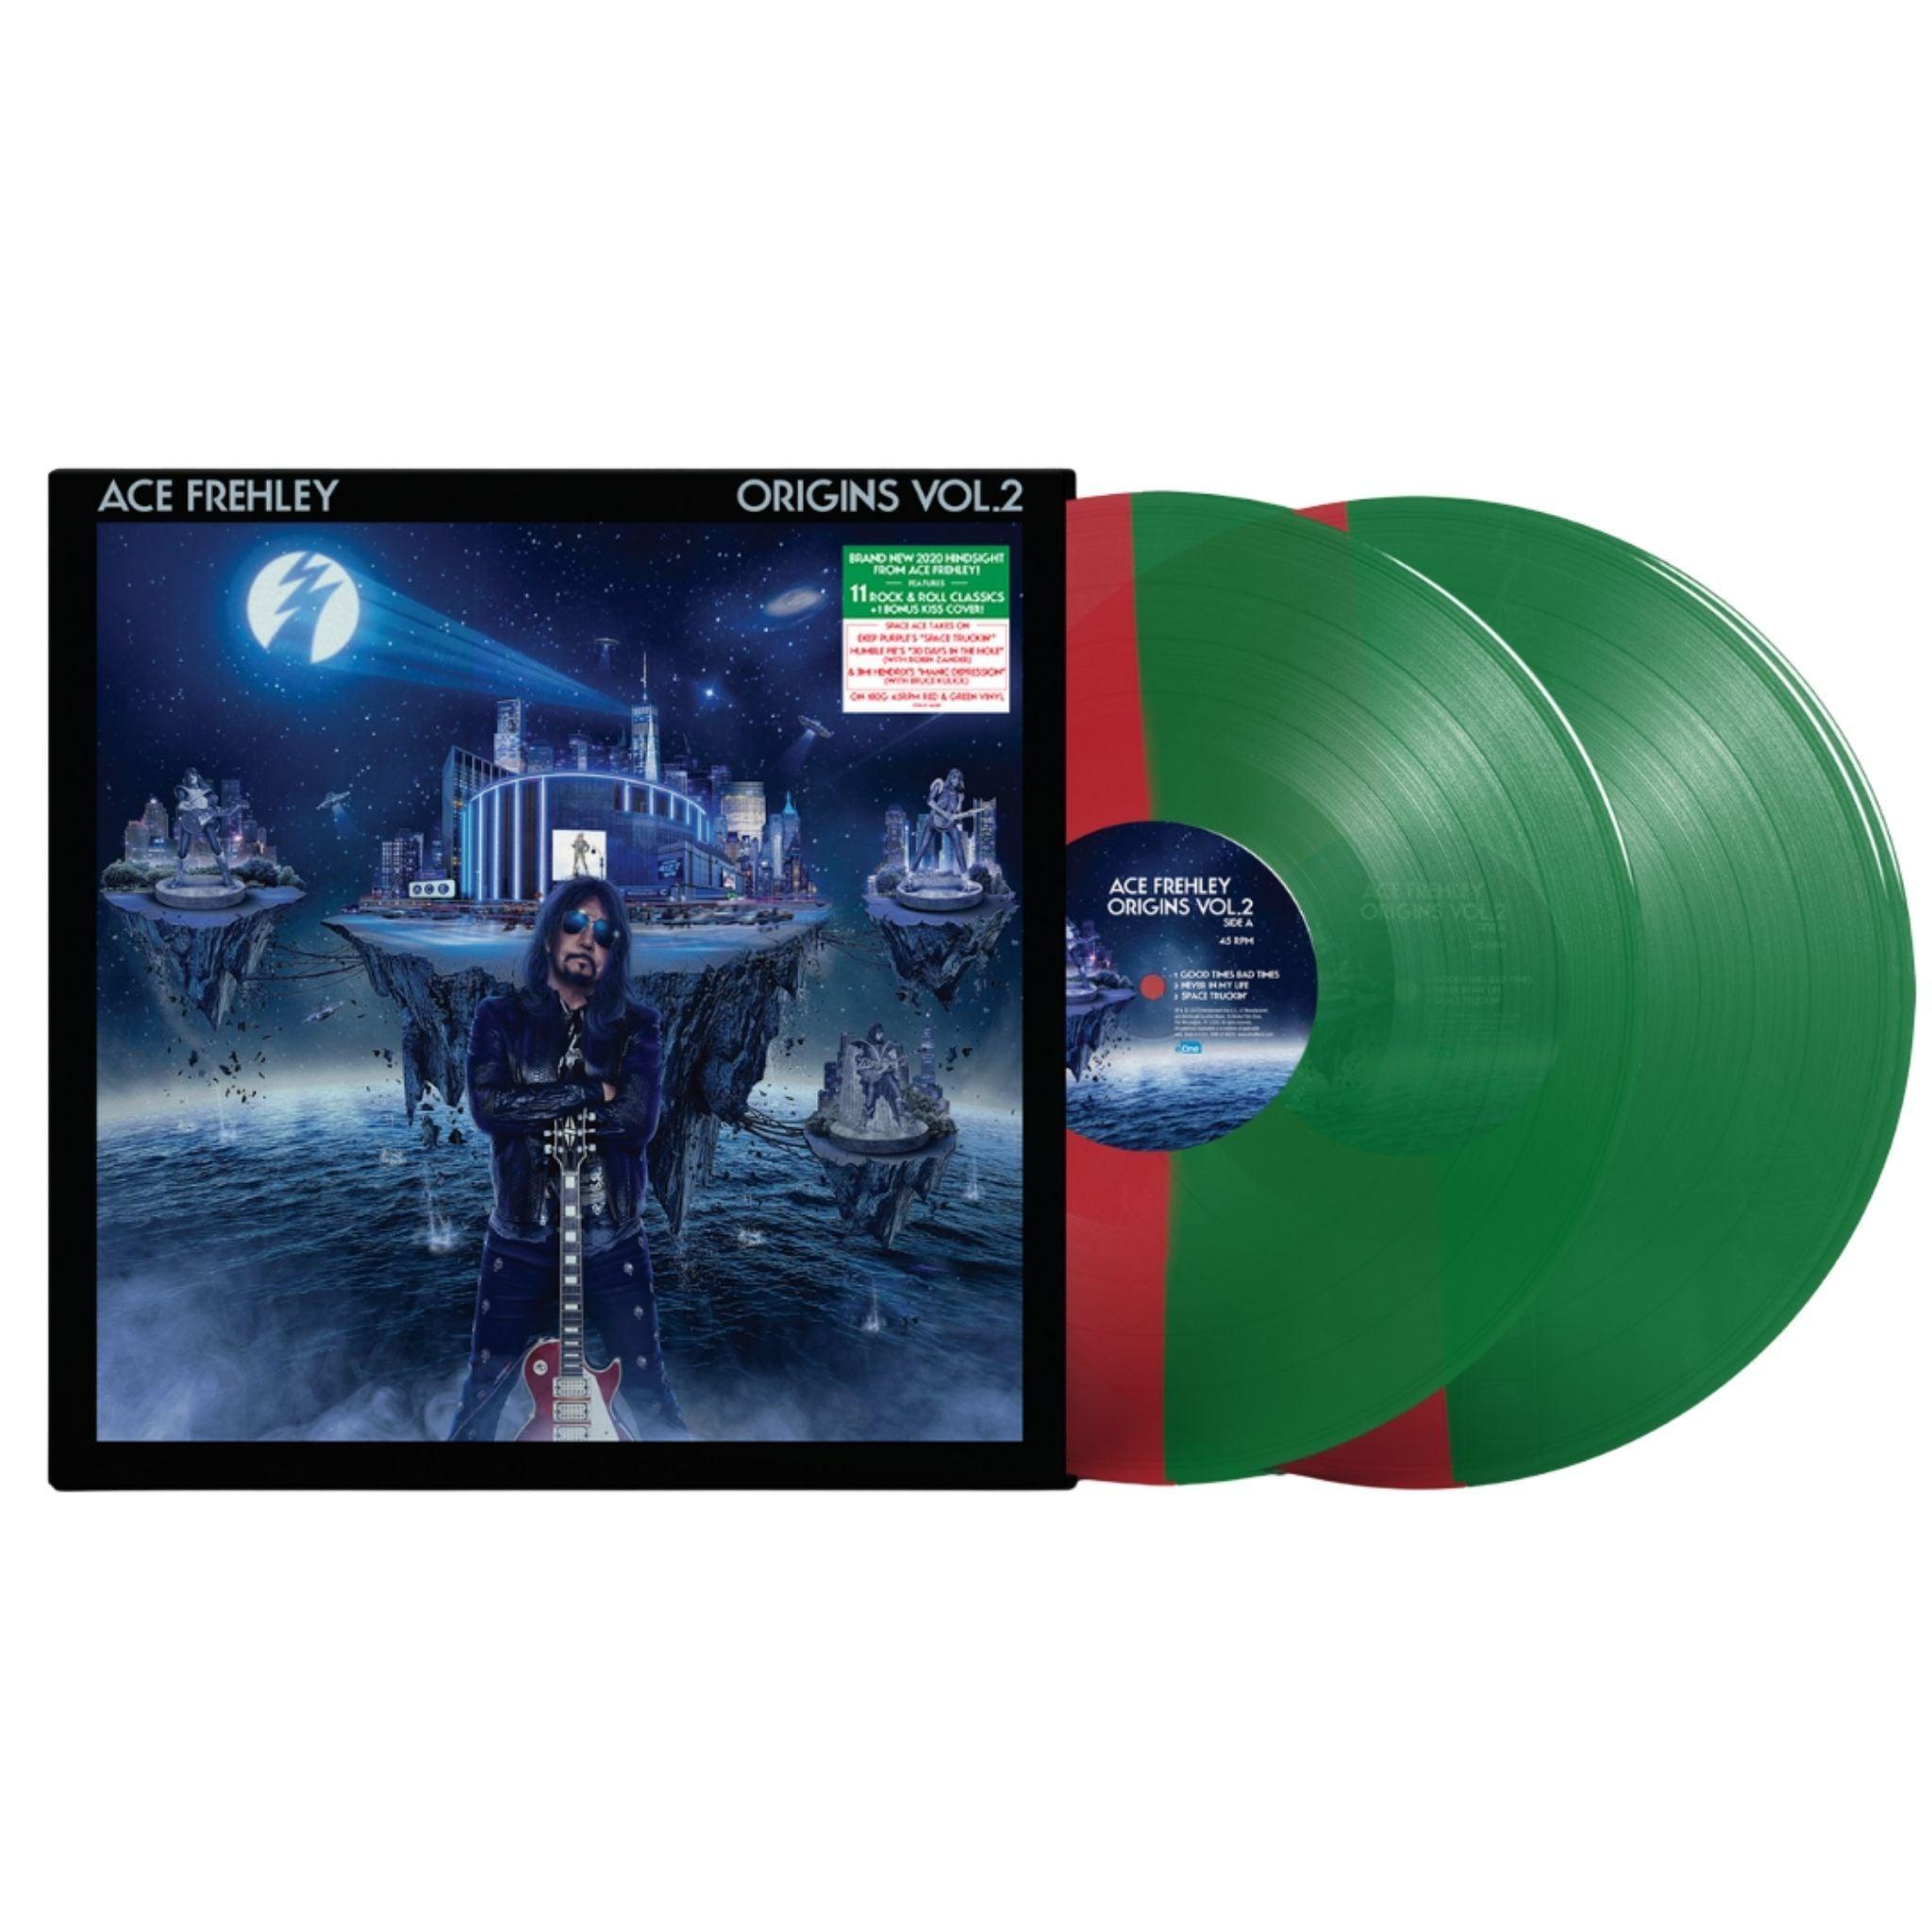 Ace Frehley - "Origins Vol.2" Red Green Edition Vinyl - MNRK Heavy